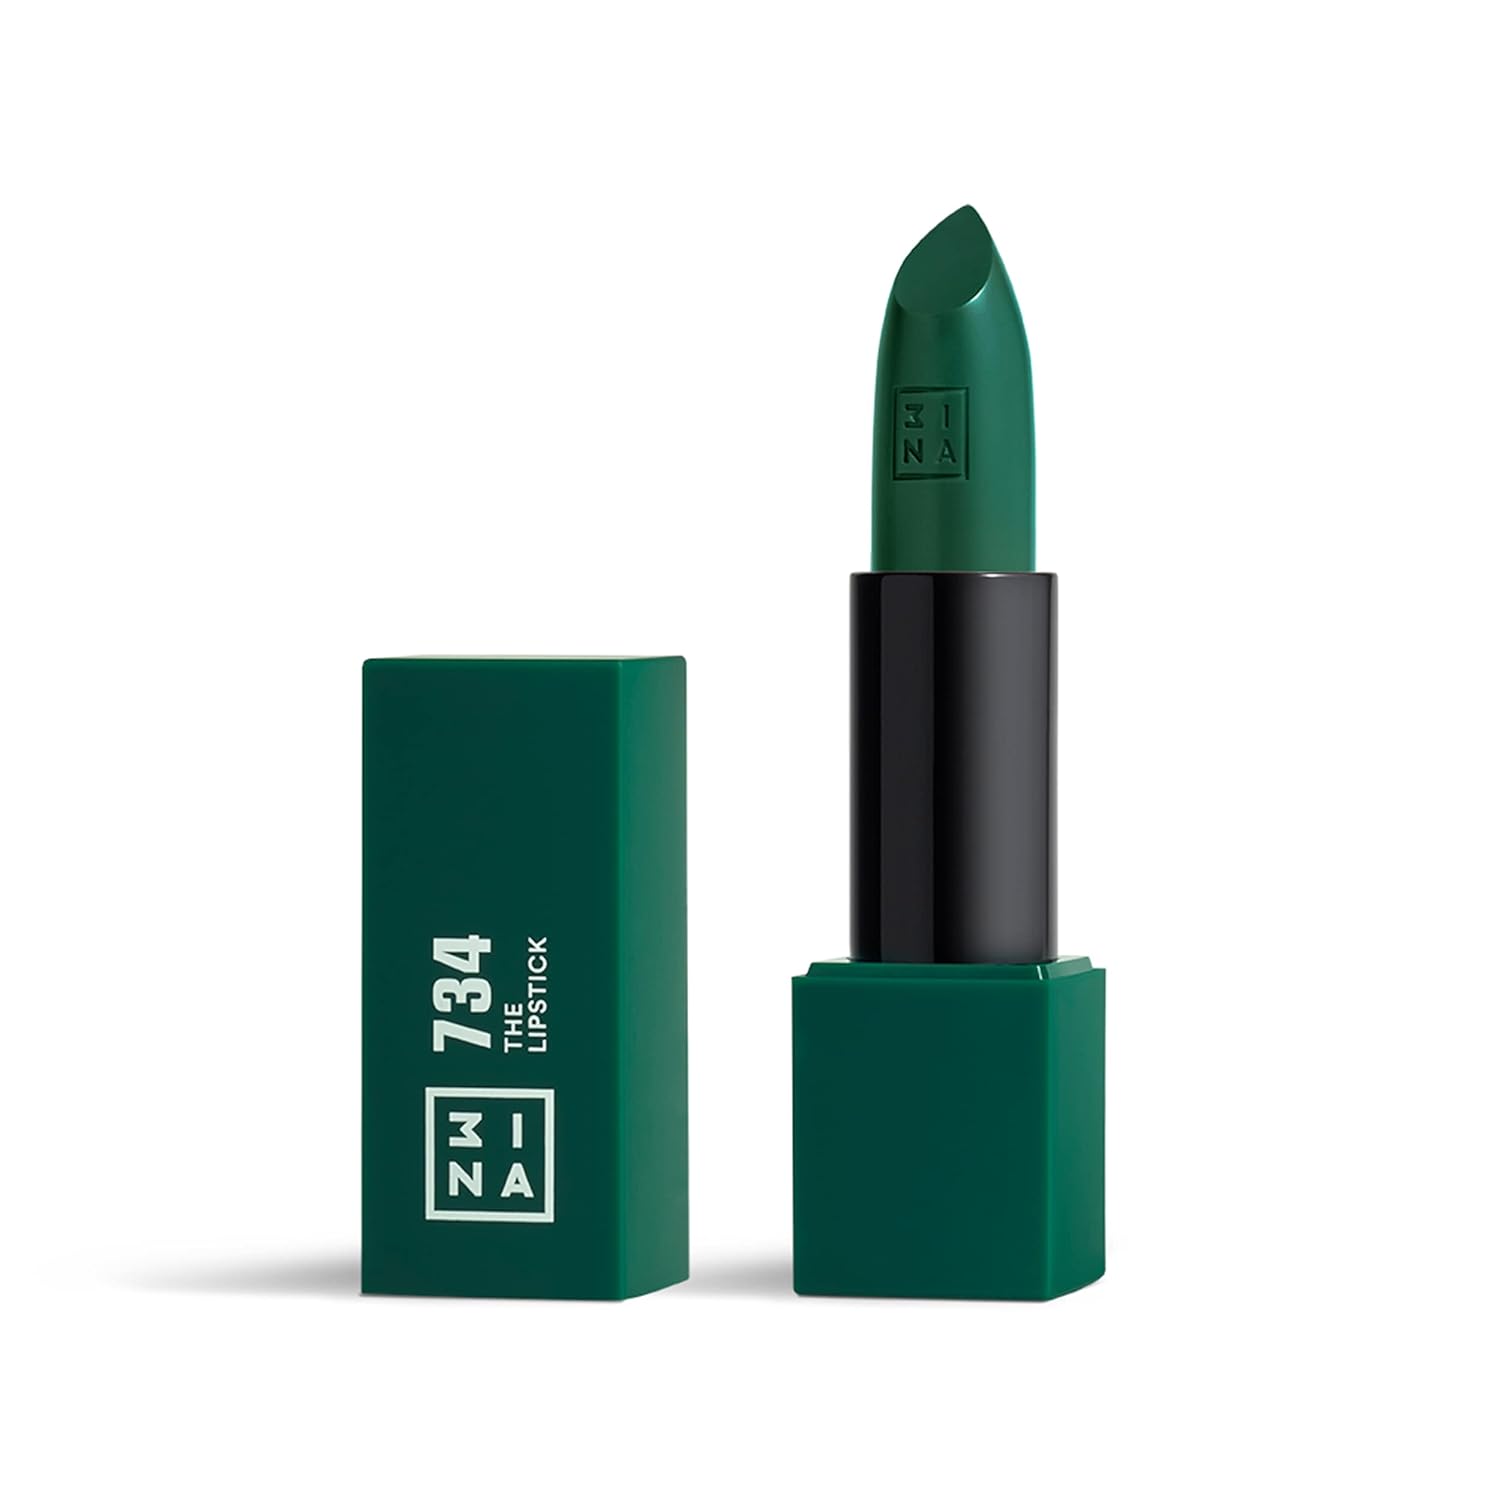 3ina makeup - The Lipstick 734 - Green Matte Lipstick - Matte Lip Pen With Vitamin E And Shea Butter - Long -Lasting Highly Pigmented Cream - Vanilla fragrance - Vegan - Cruethy Free